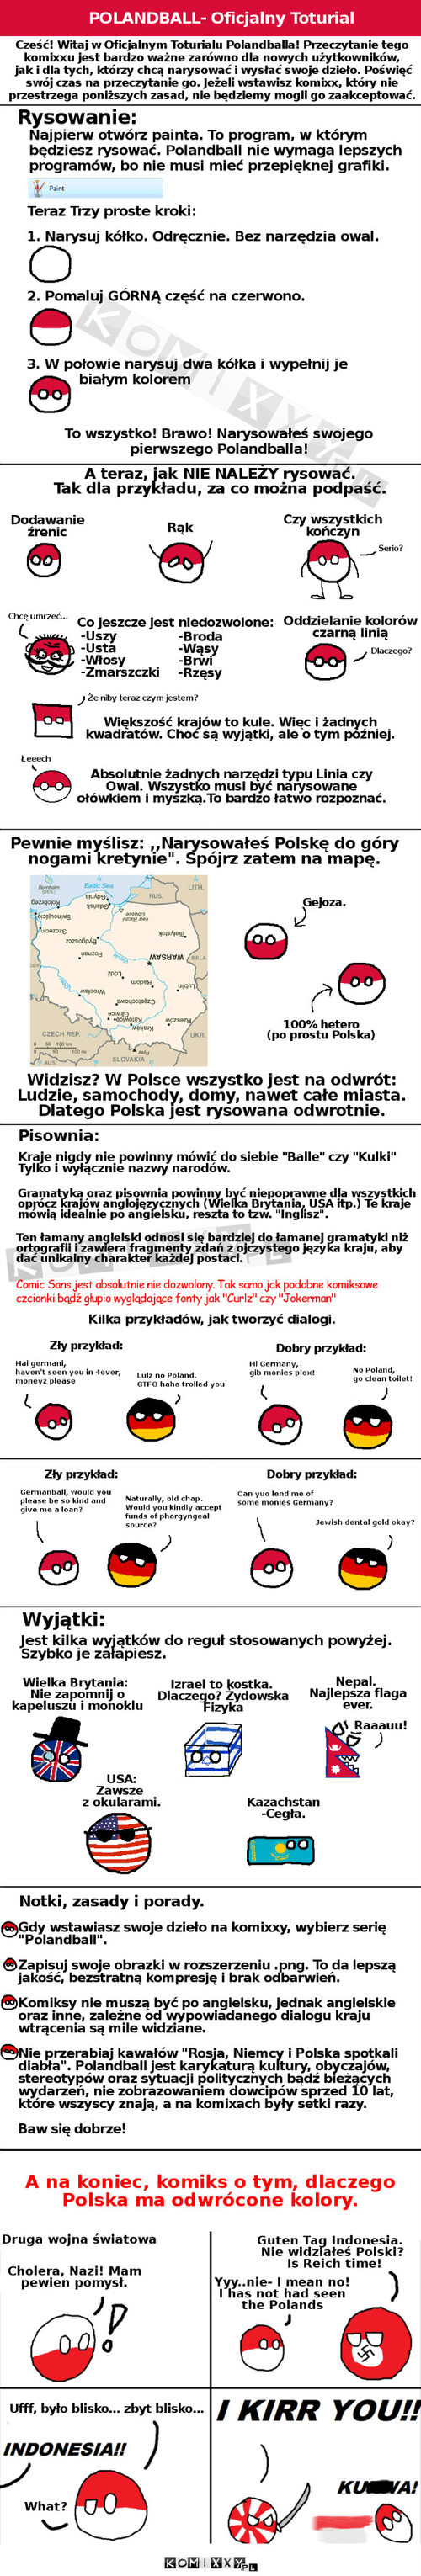 Oficjalny tutorial Polandballa –  